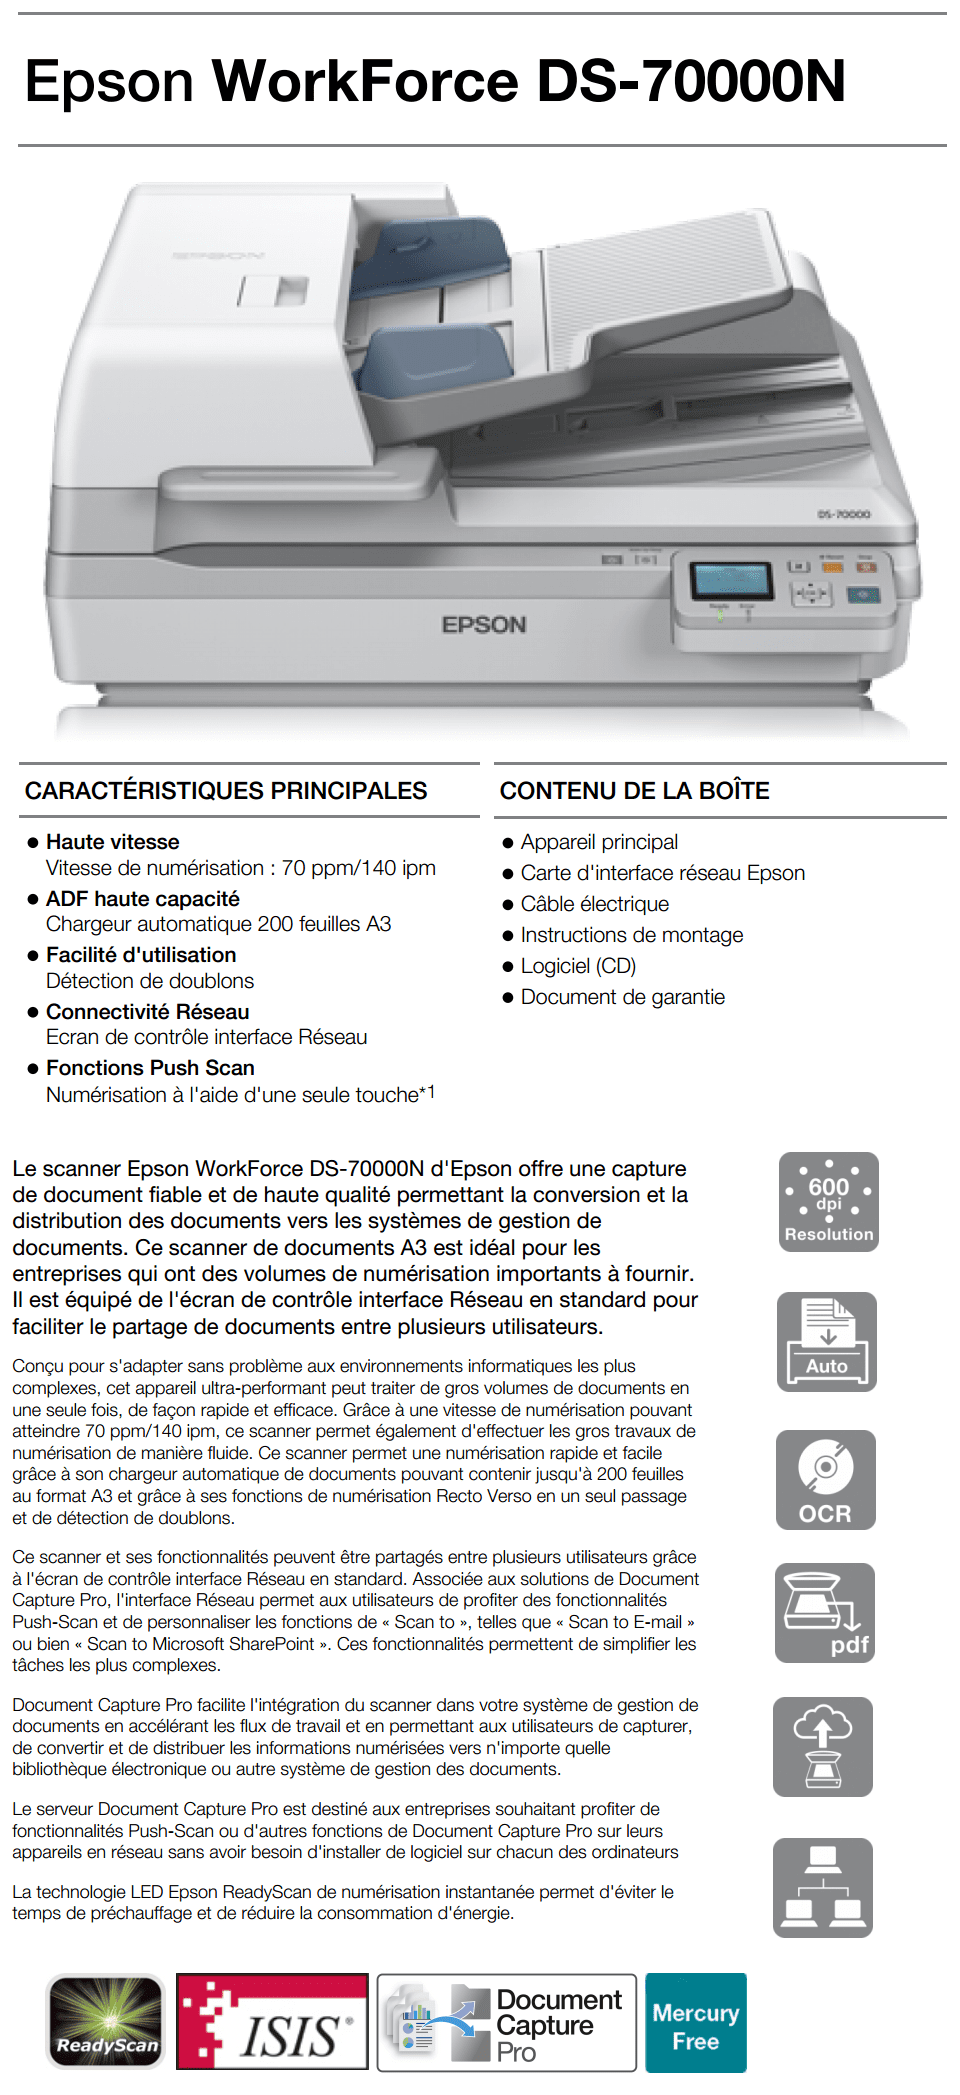 Epson WorkForce DS-60000 - Scanner de documents - Recto-verso - A3